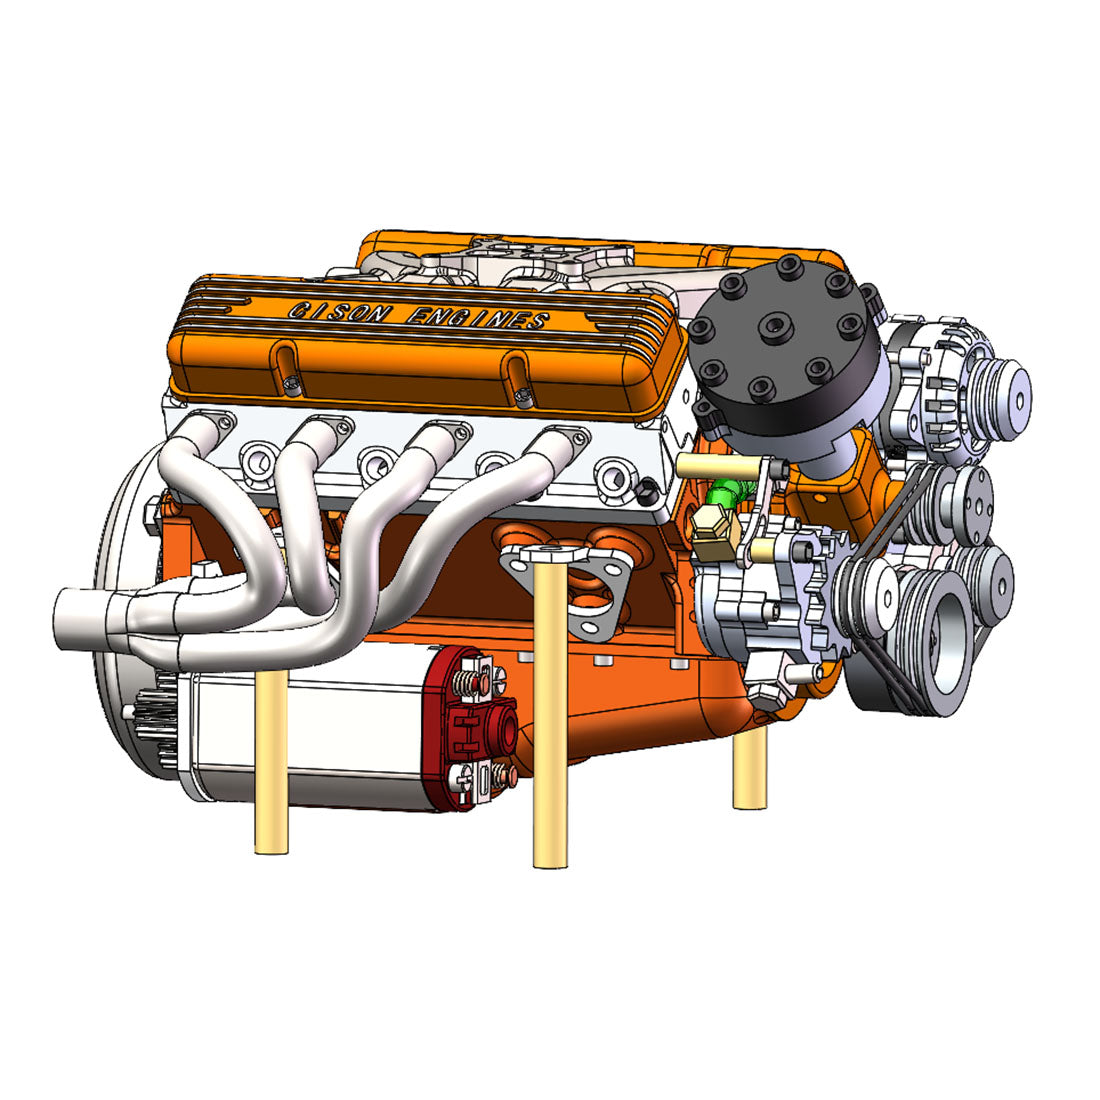 Cison V8 Engine Kits V8-440 with Metal Base Full Set 44cc